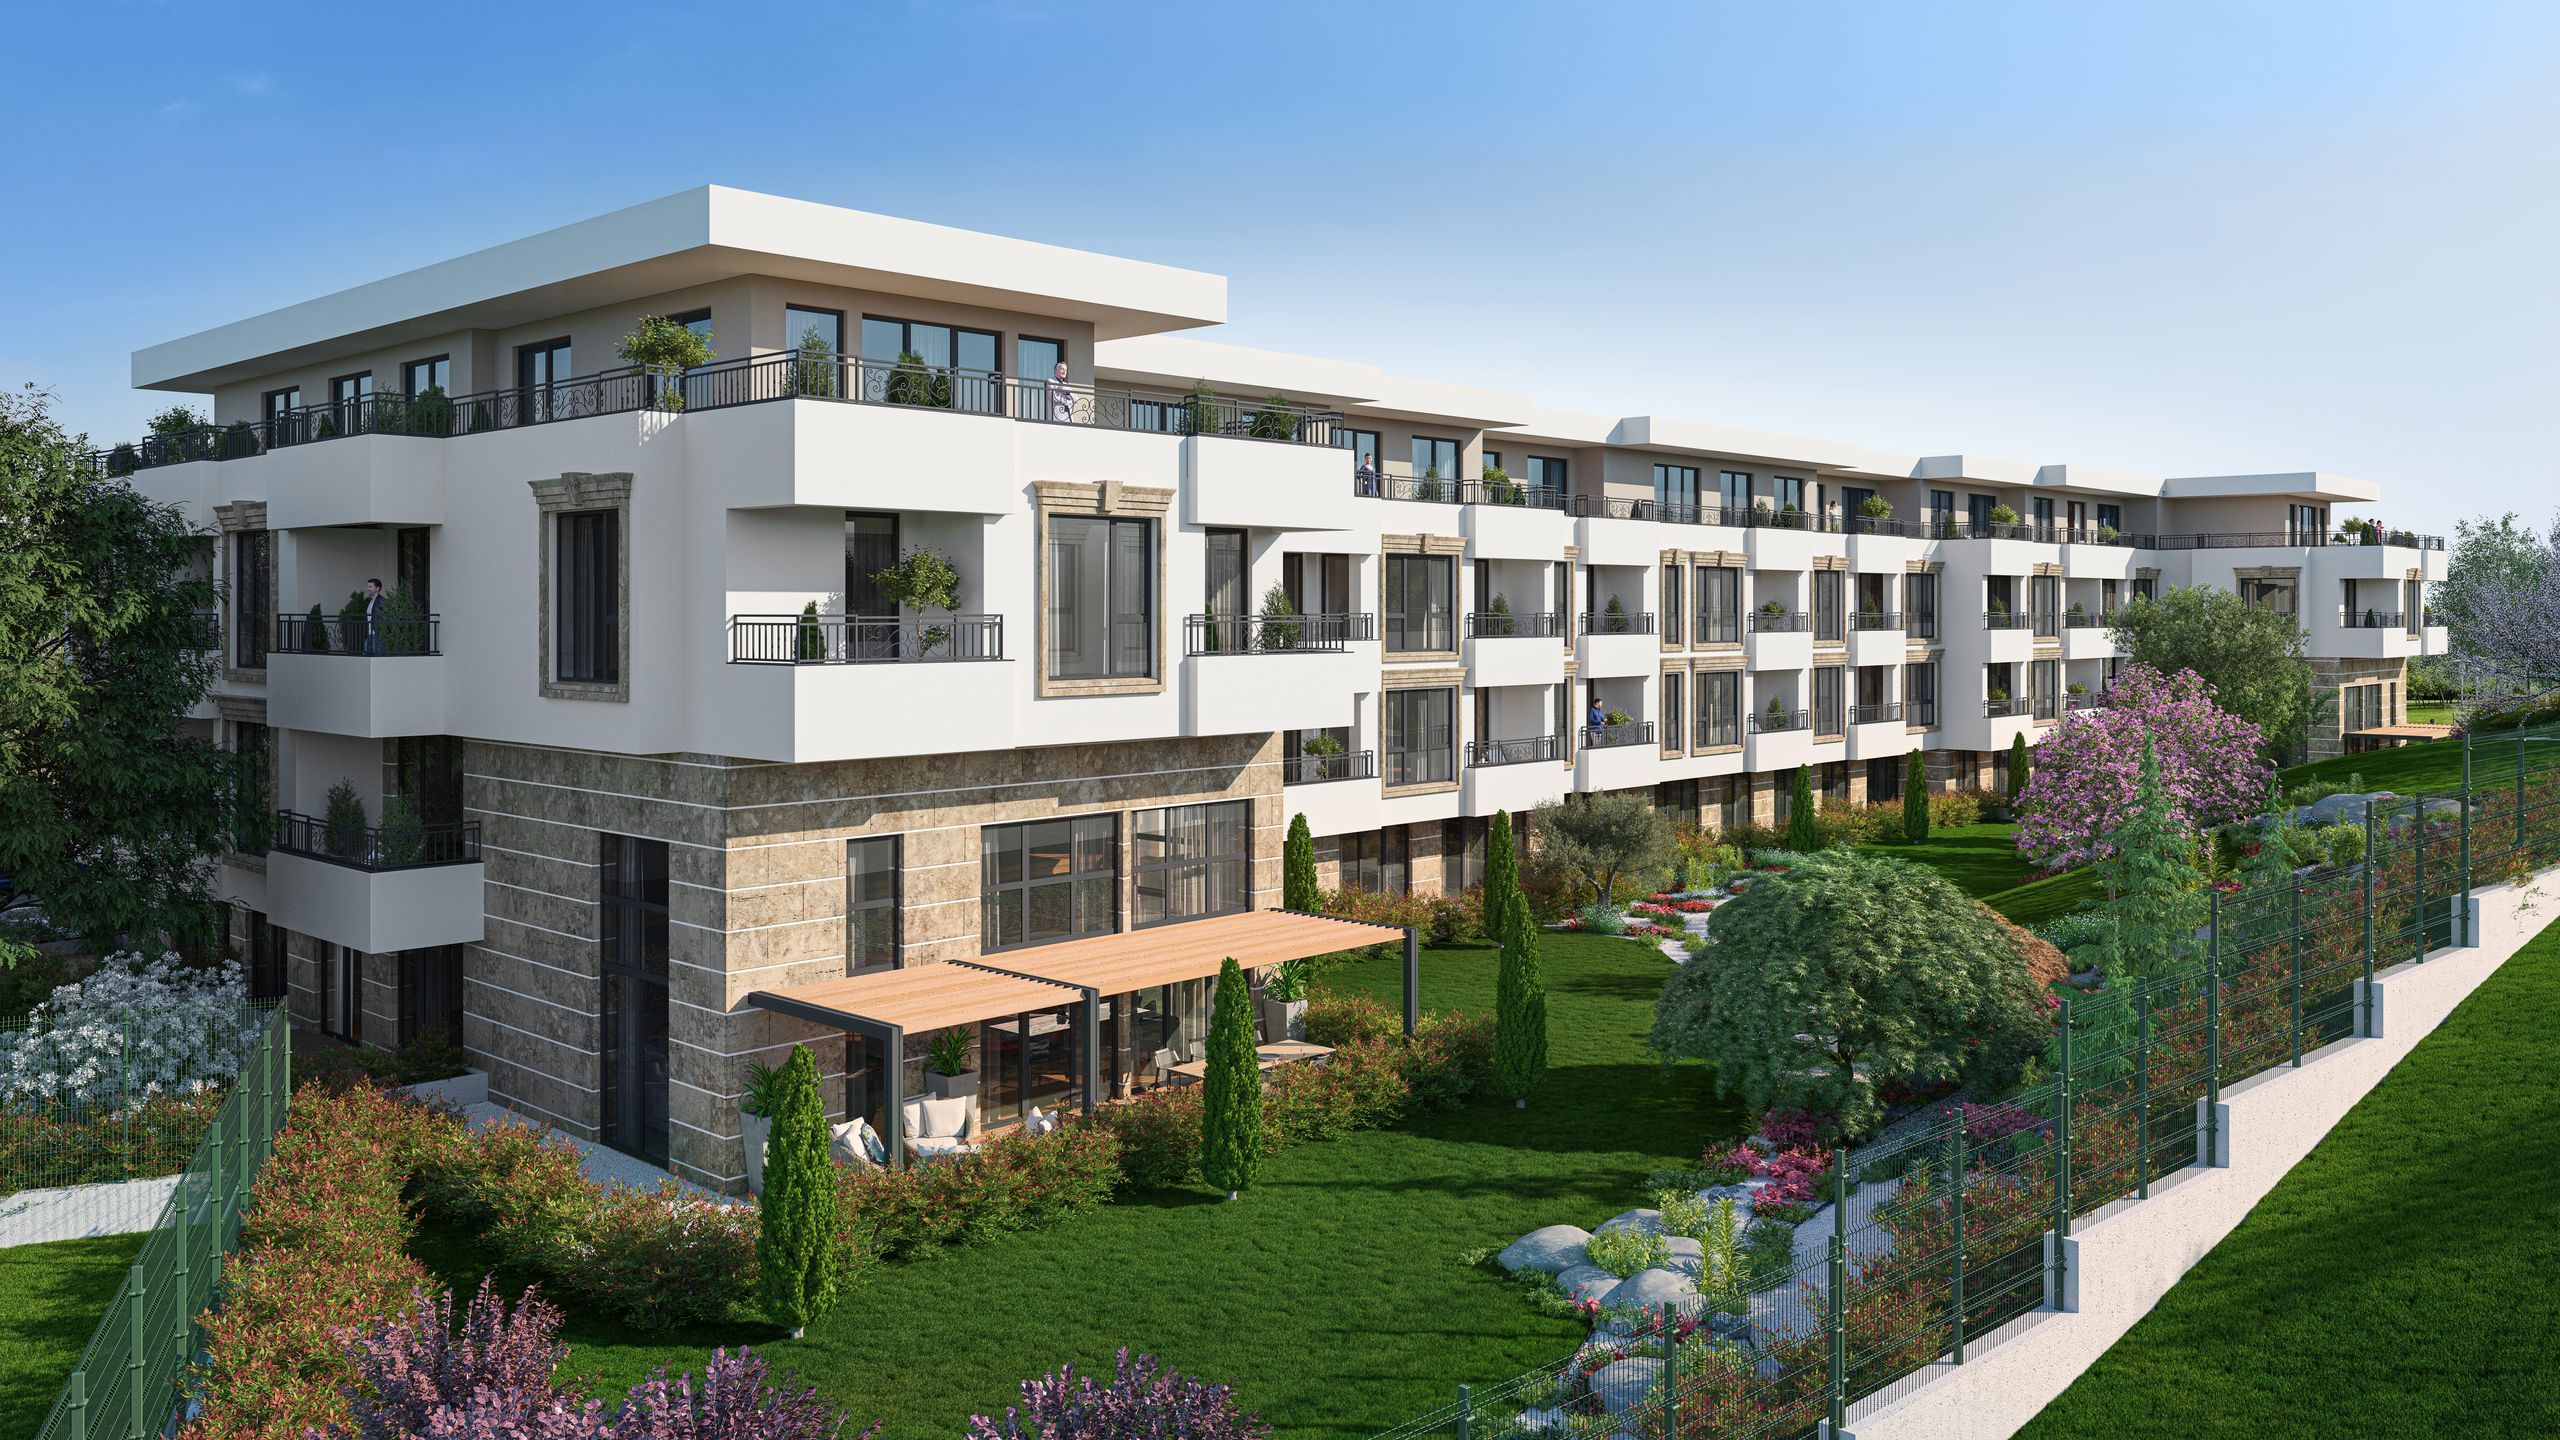 Vitosha Mountain View - apartments for SALE in Vitosha district, Sofia